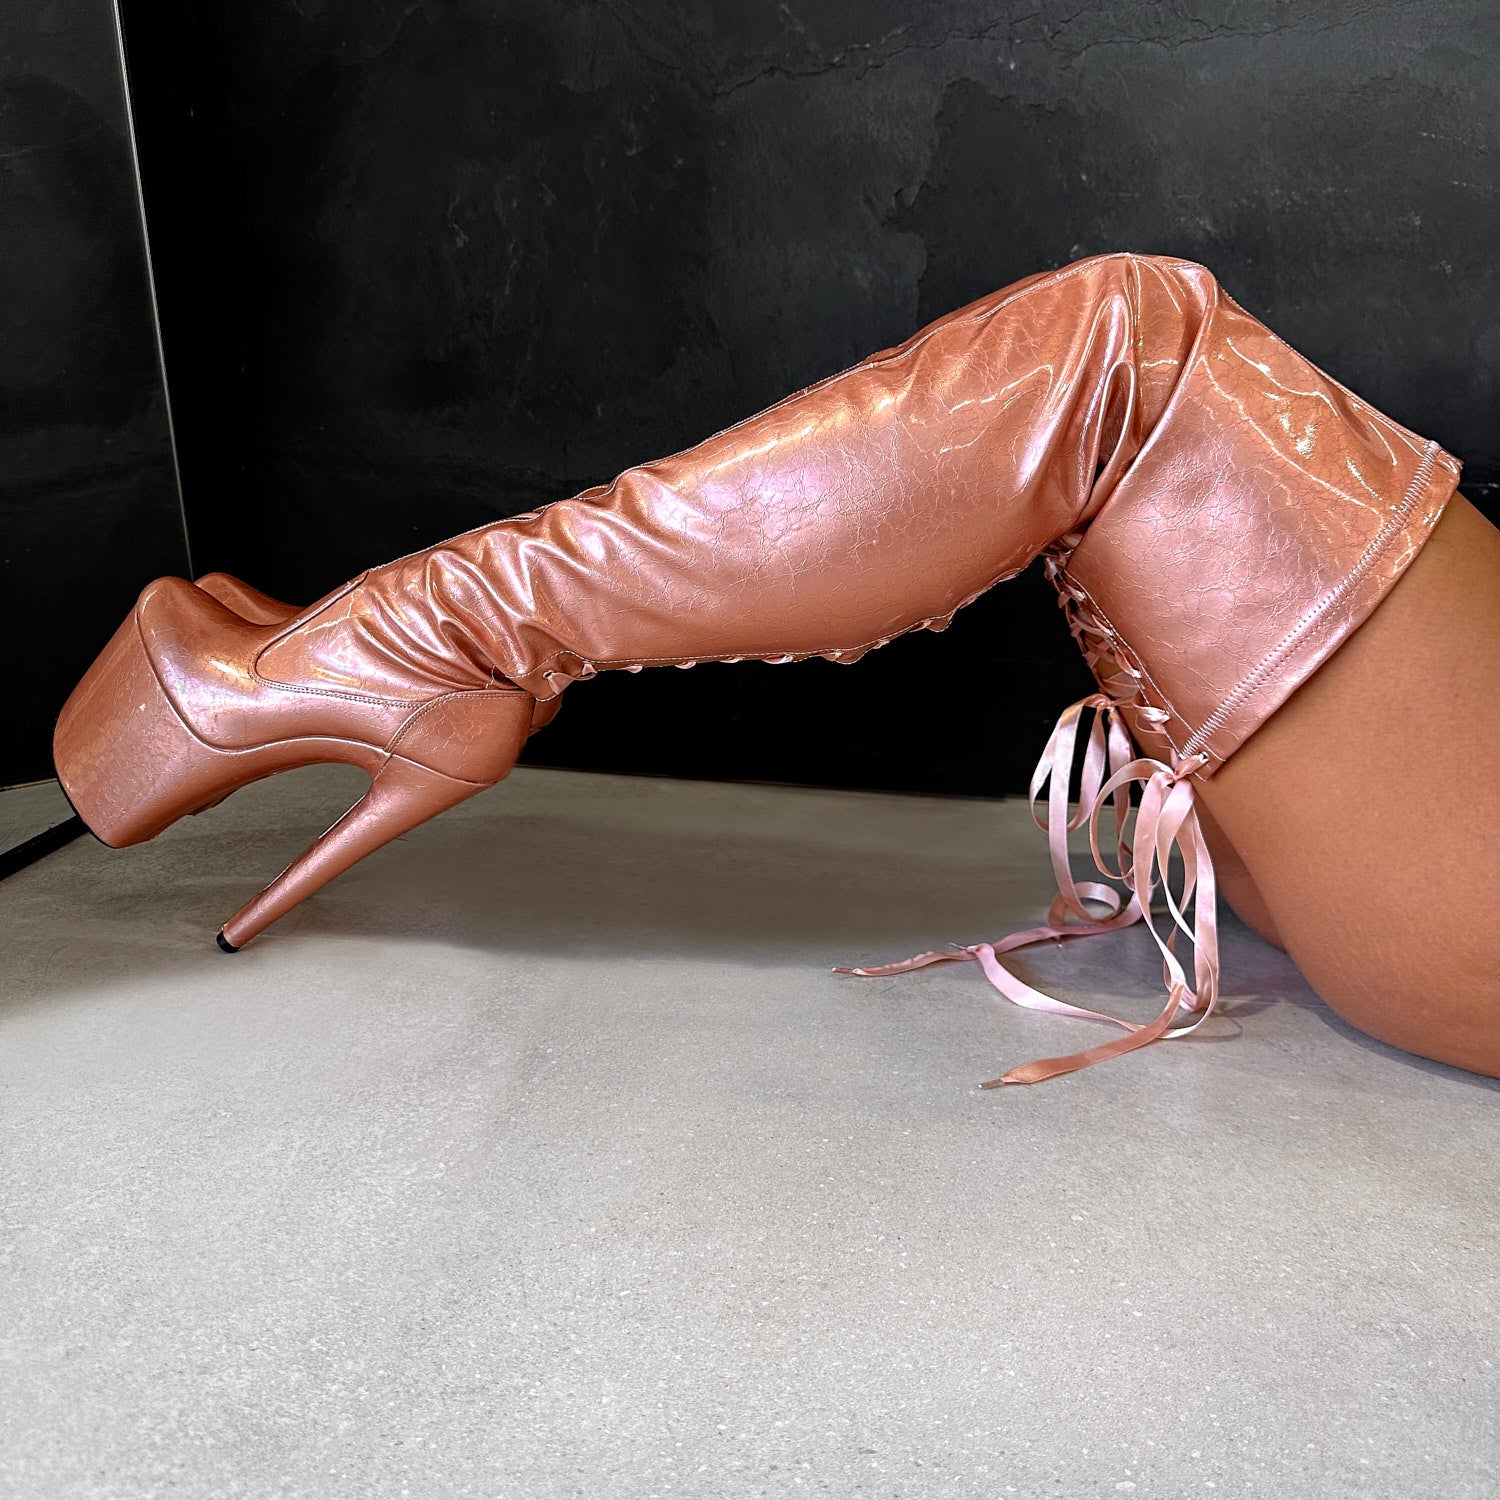 Heartbreaker - Rose Gold Thicc Thigh High - 8 INCH, stripper shoe, stripper heel, pole heel, not a pleaser, platform, dancer, pole dance, floor work